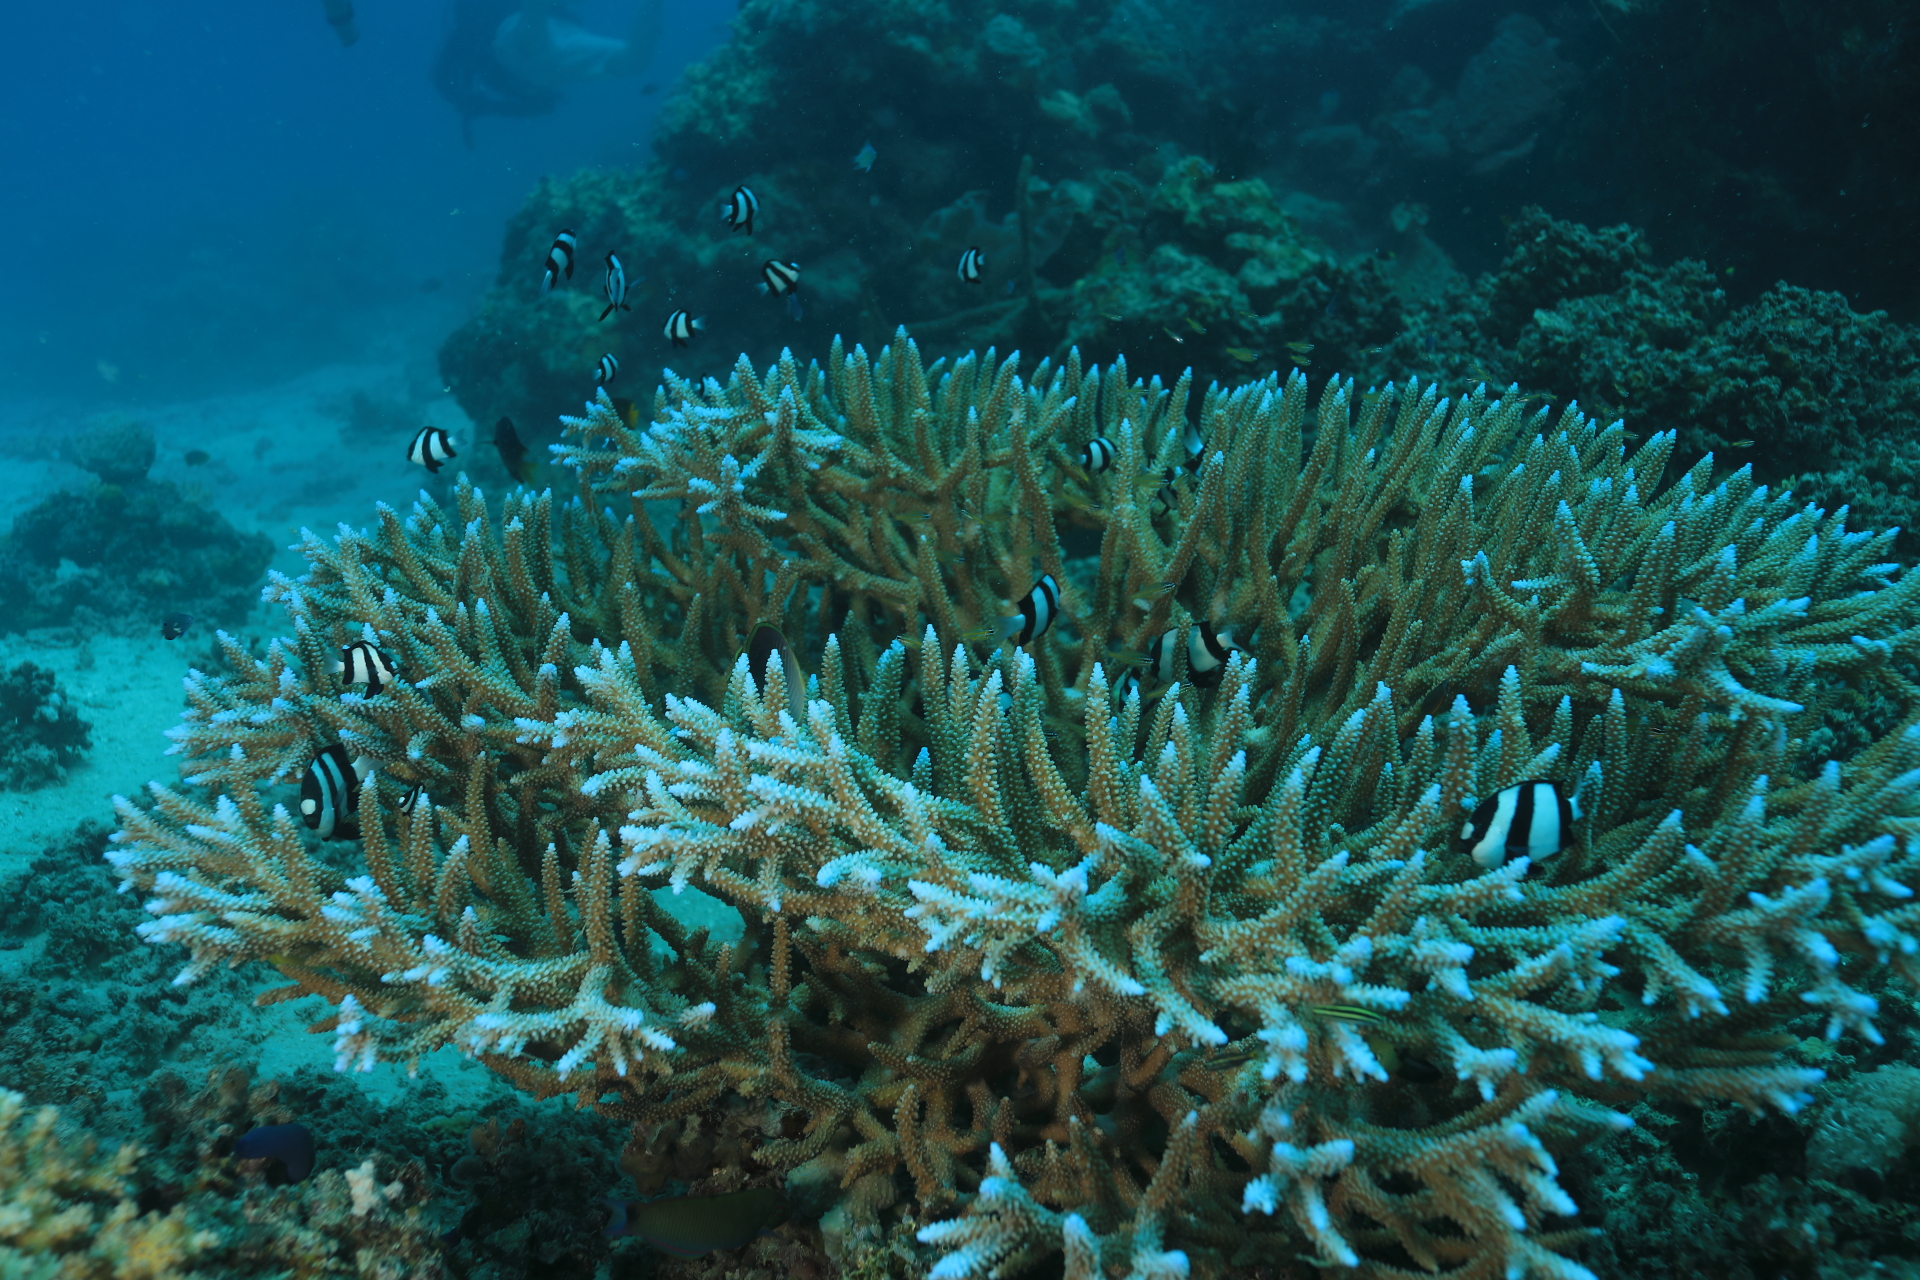 Dascyllus on Staghorn Coral (Dec 25, 2021)